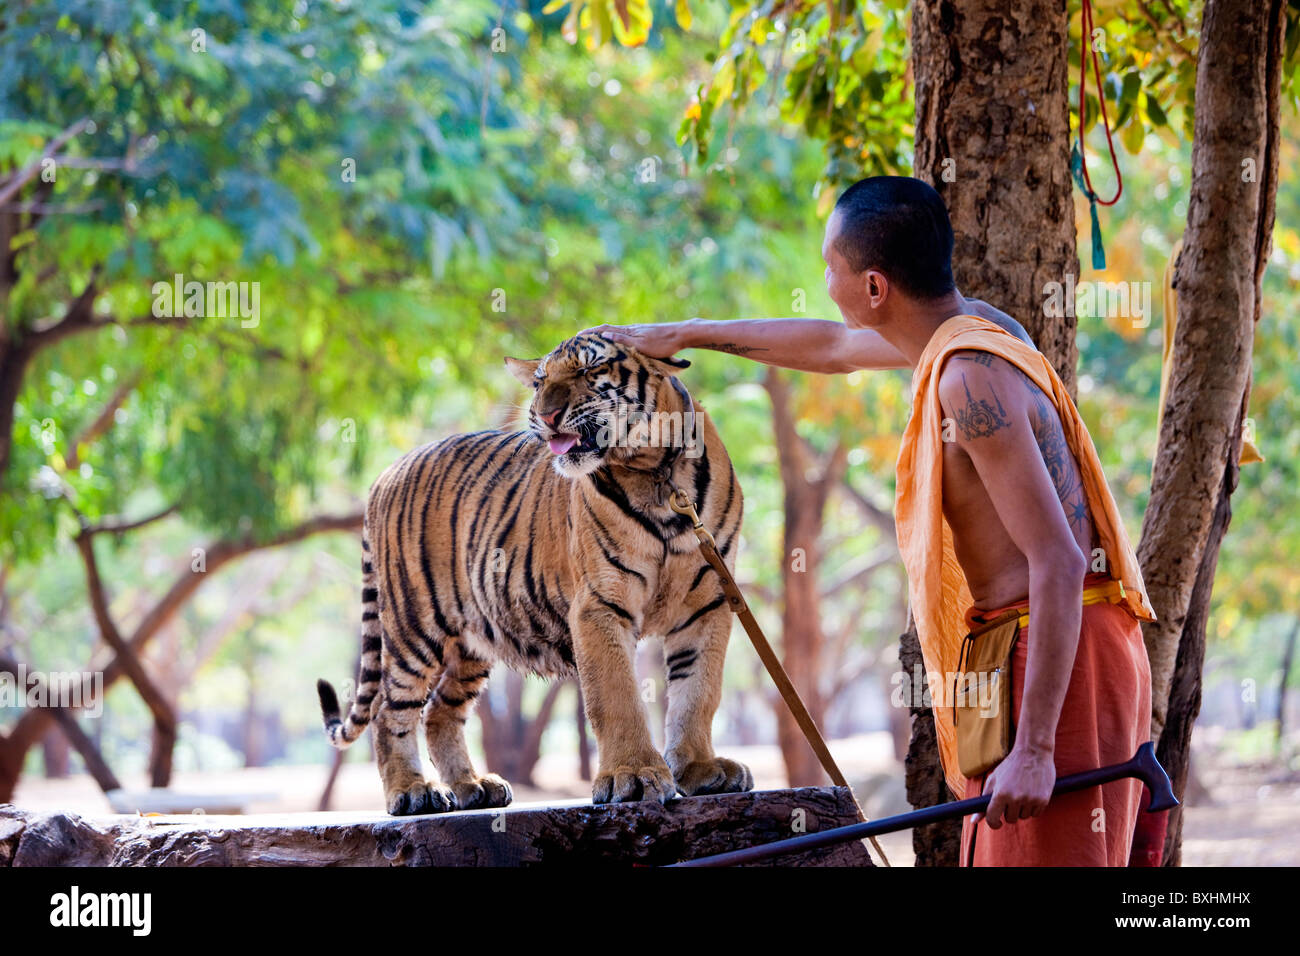 Le moine bouddhiste avec Tiger, tigre Indochinois ou Corbett tiger (Panthera tigris corbetti), Thaïlande Banque D'Images